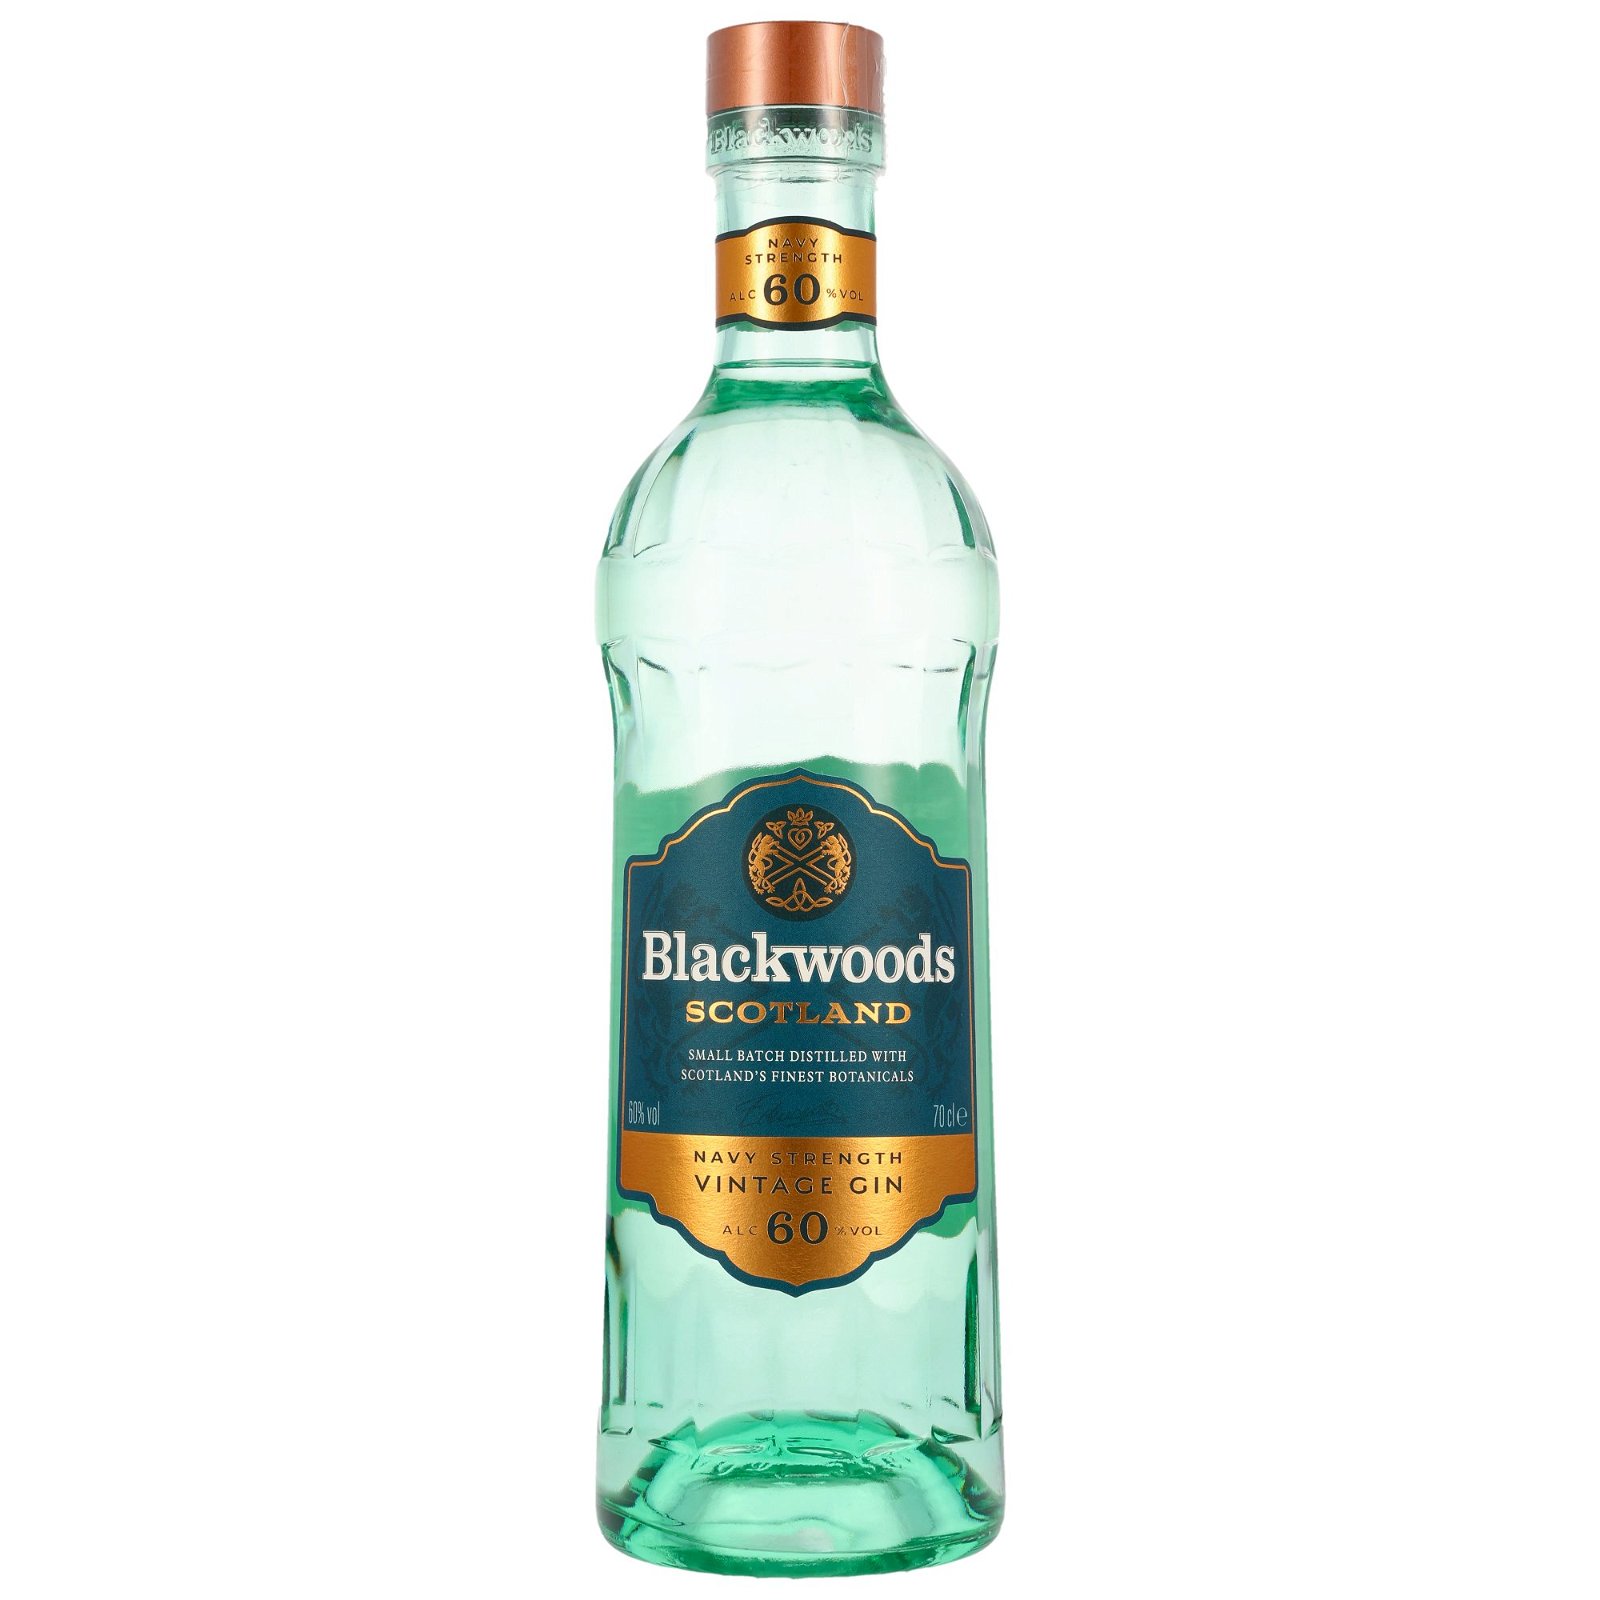 Blackwoods Navy Strength Vintage Gin